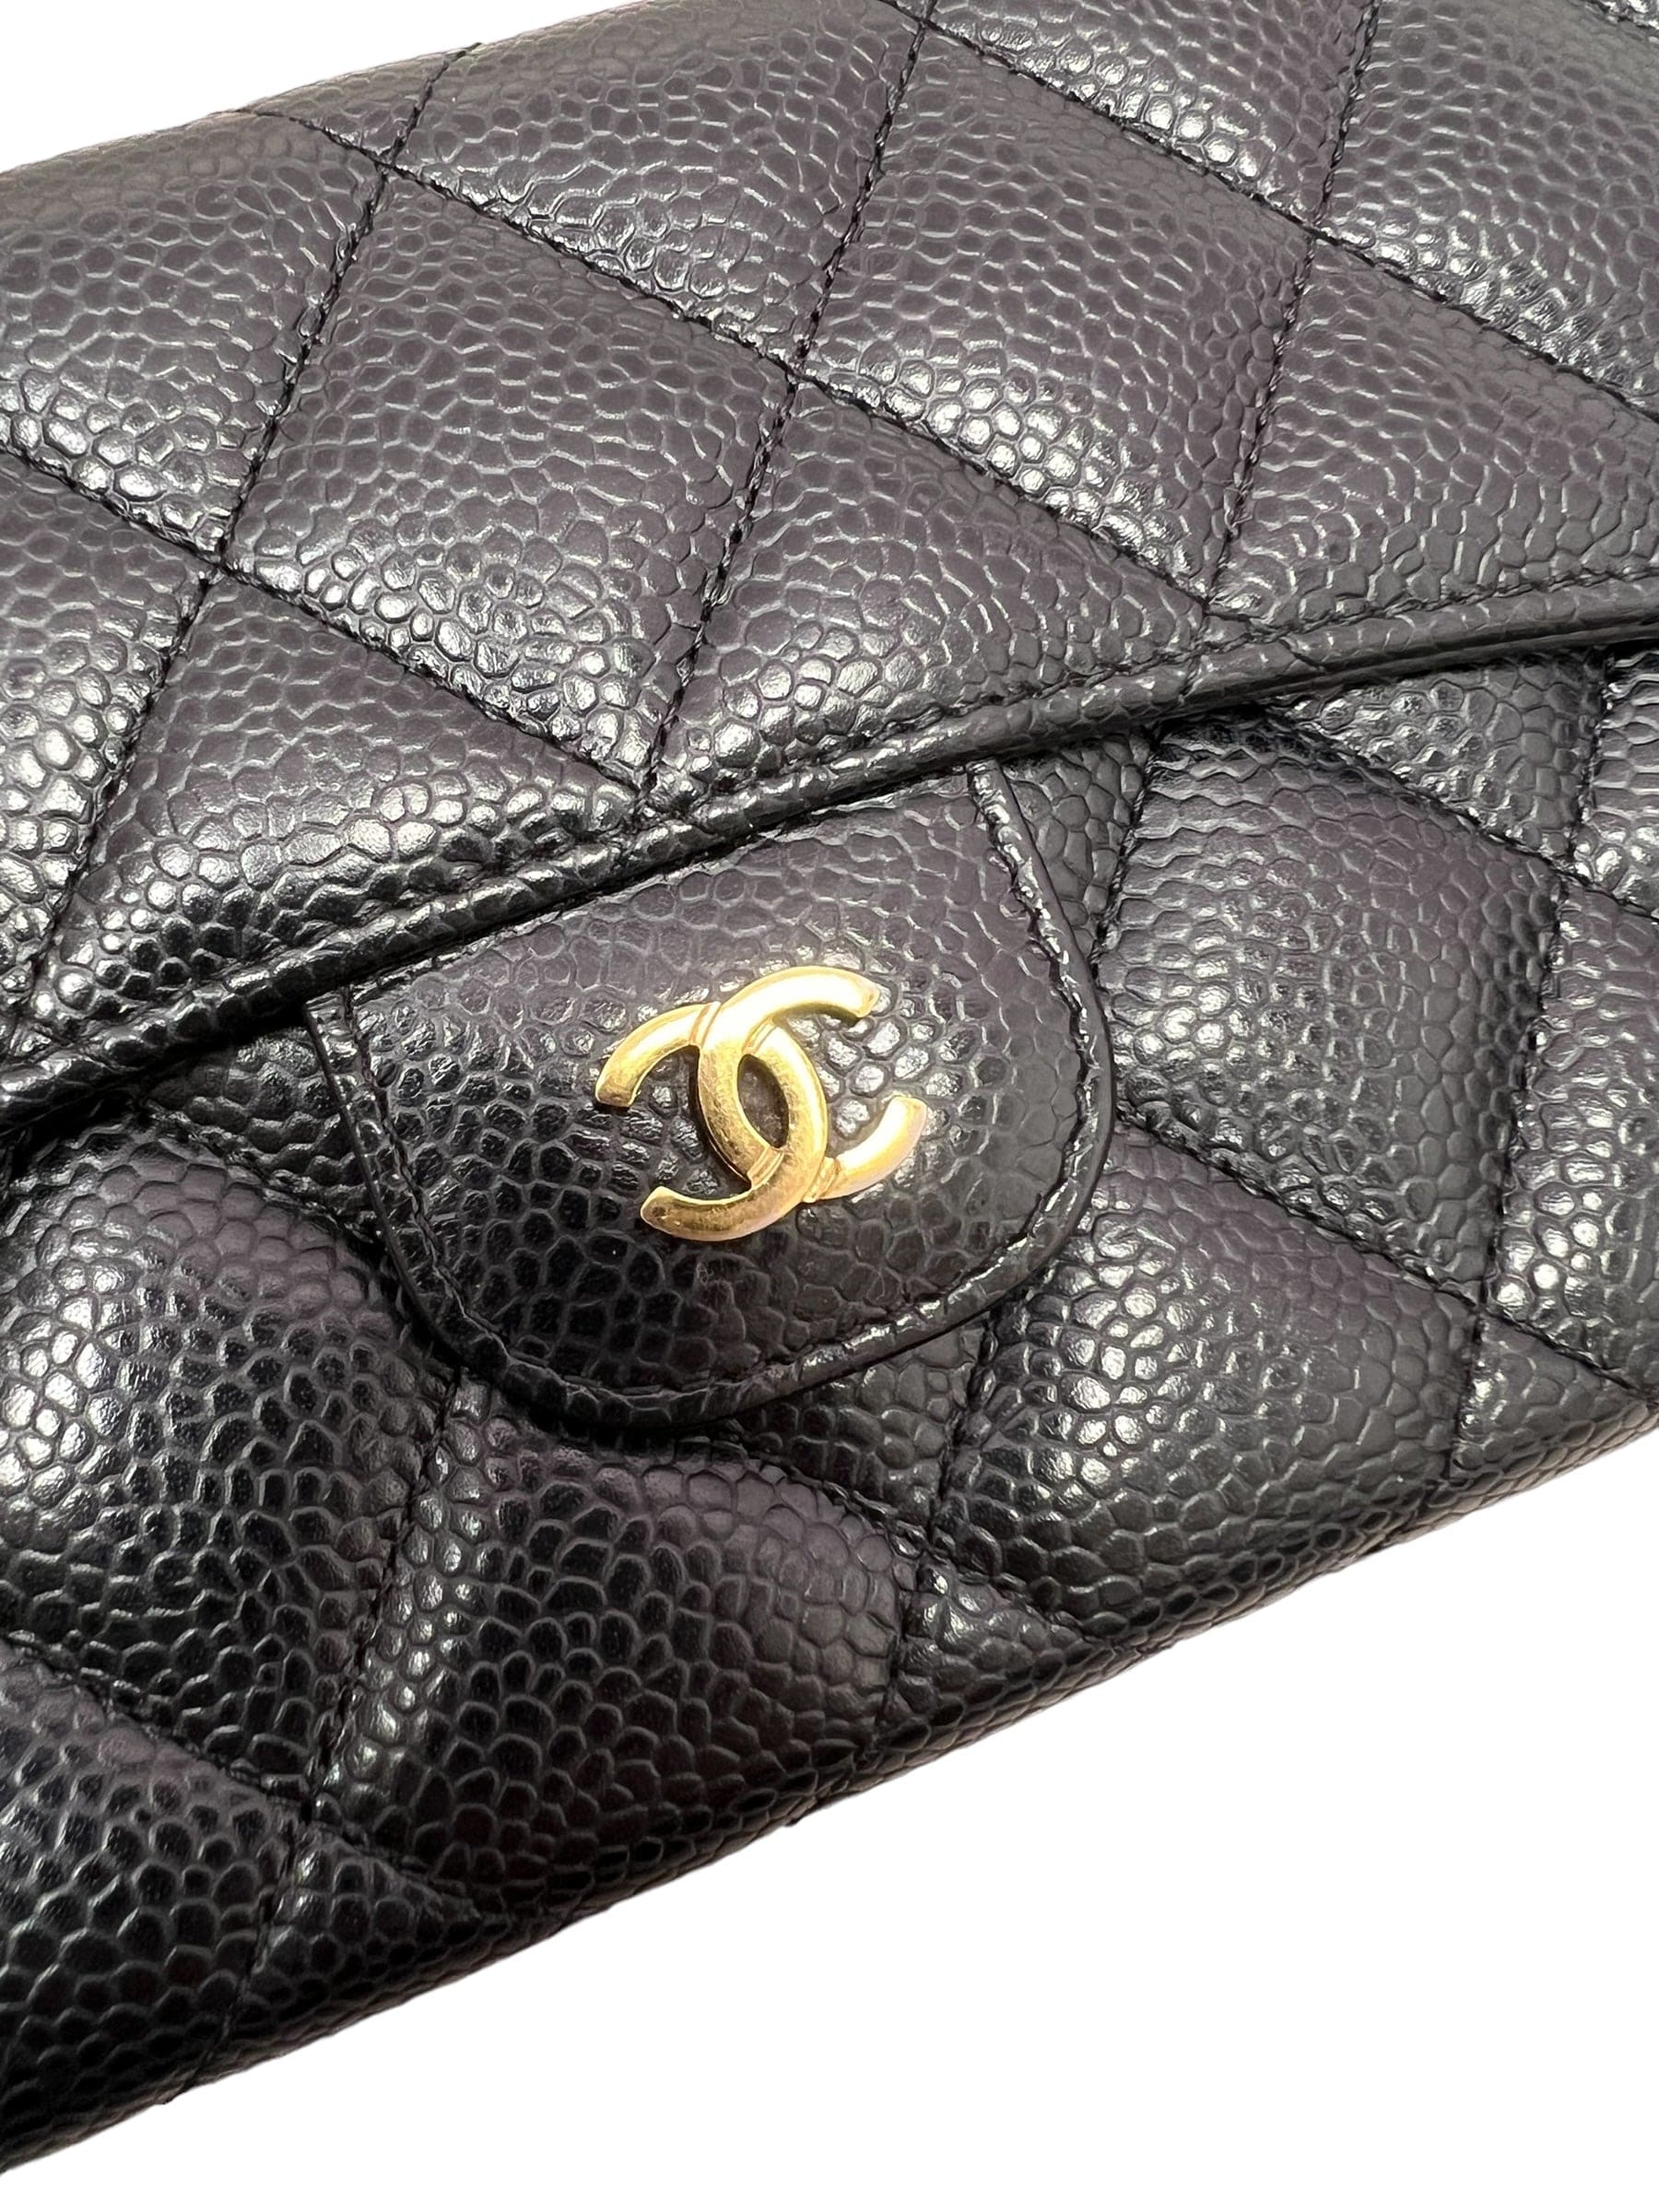 Chanel Chanel Long Wallet Black Caviar GHW #21 SYC1173